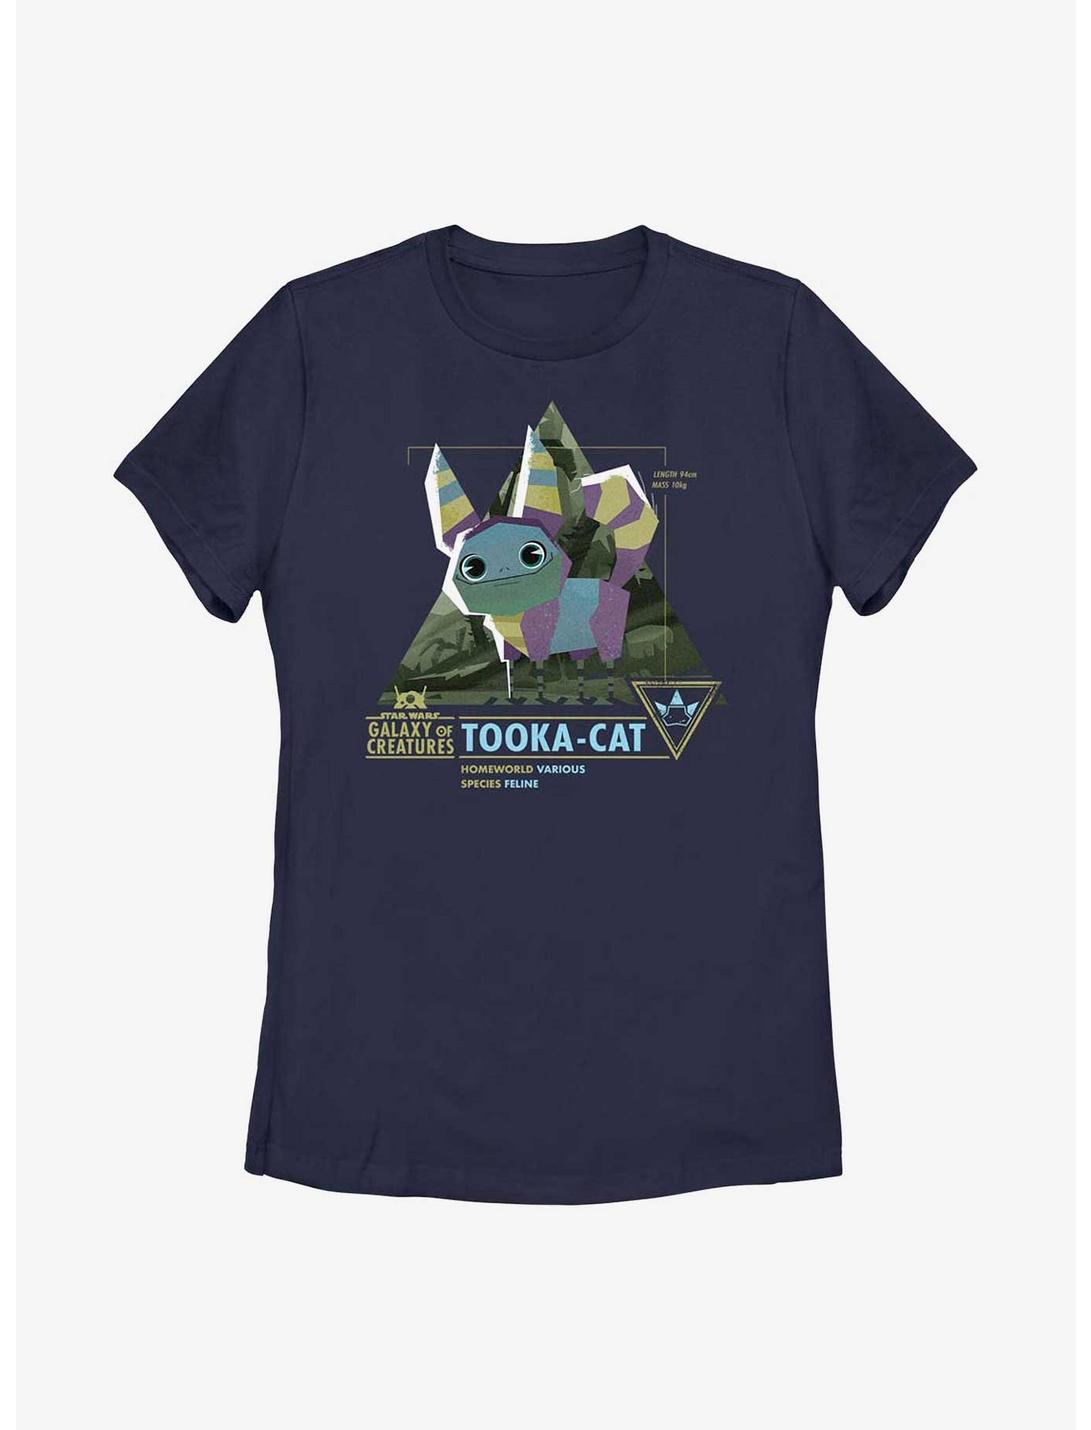 Star Wars Galaxy Of Creatures Tooka-Cat Species Womens T-Shirt, NAVY, hi-res